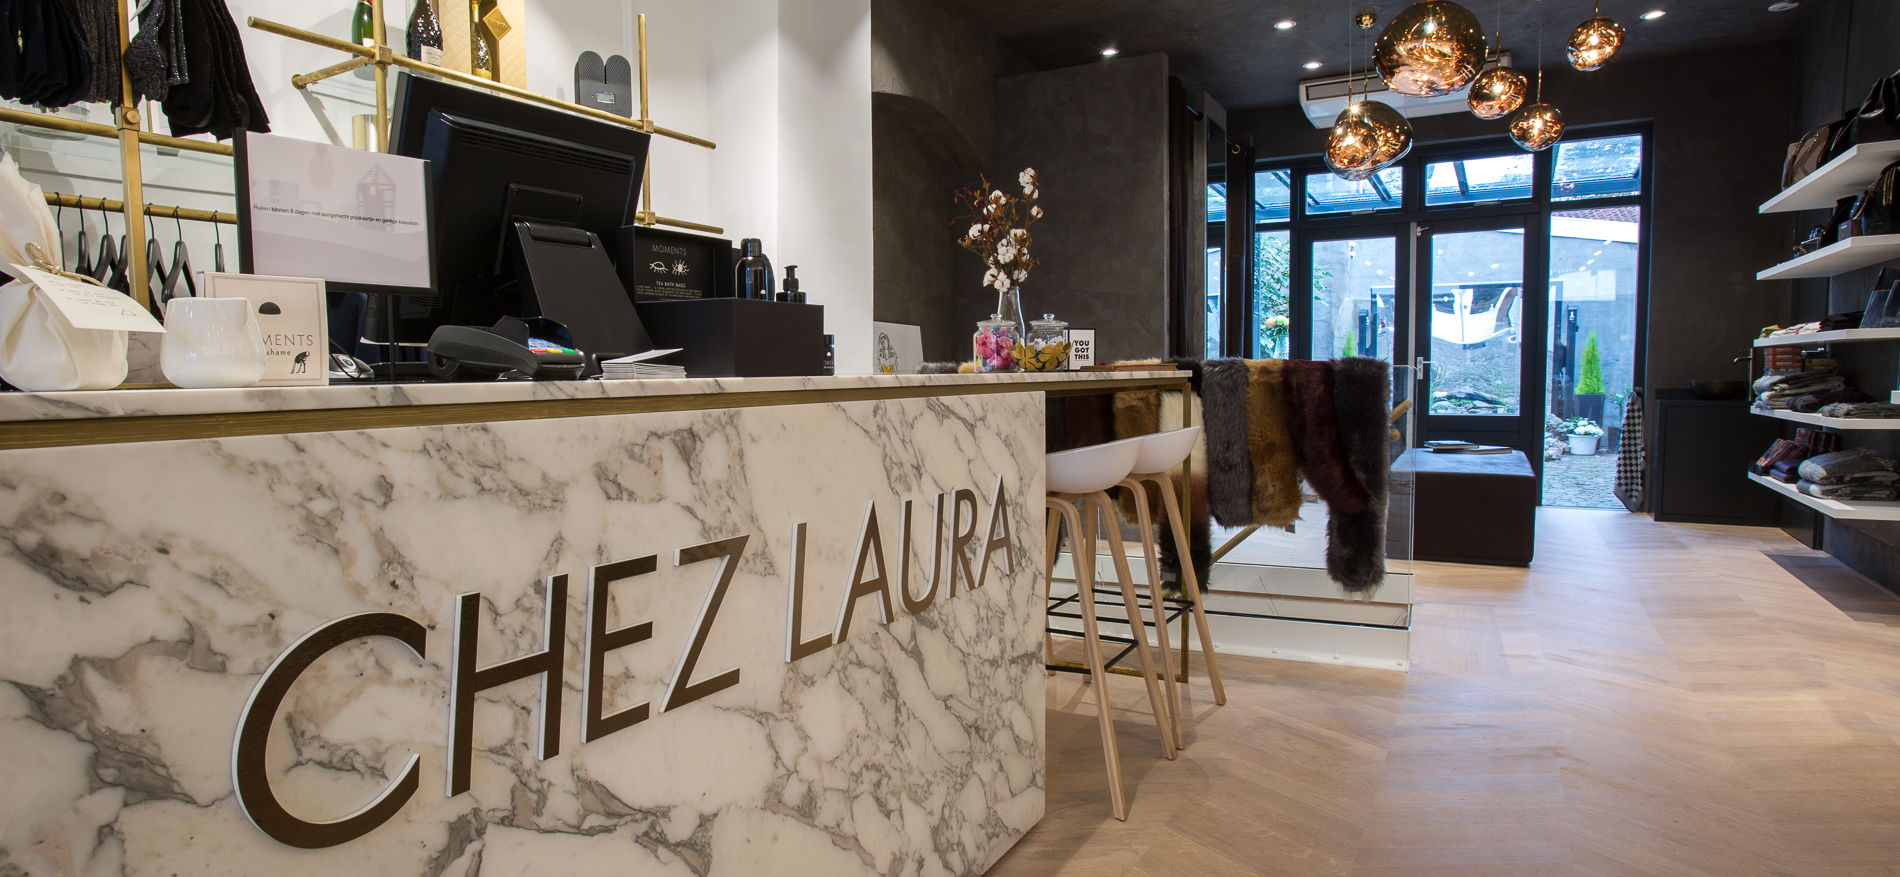 Chez Laura Boutique | Harderwijk - Mode